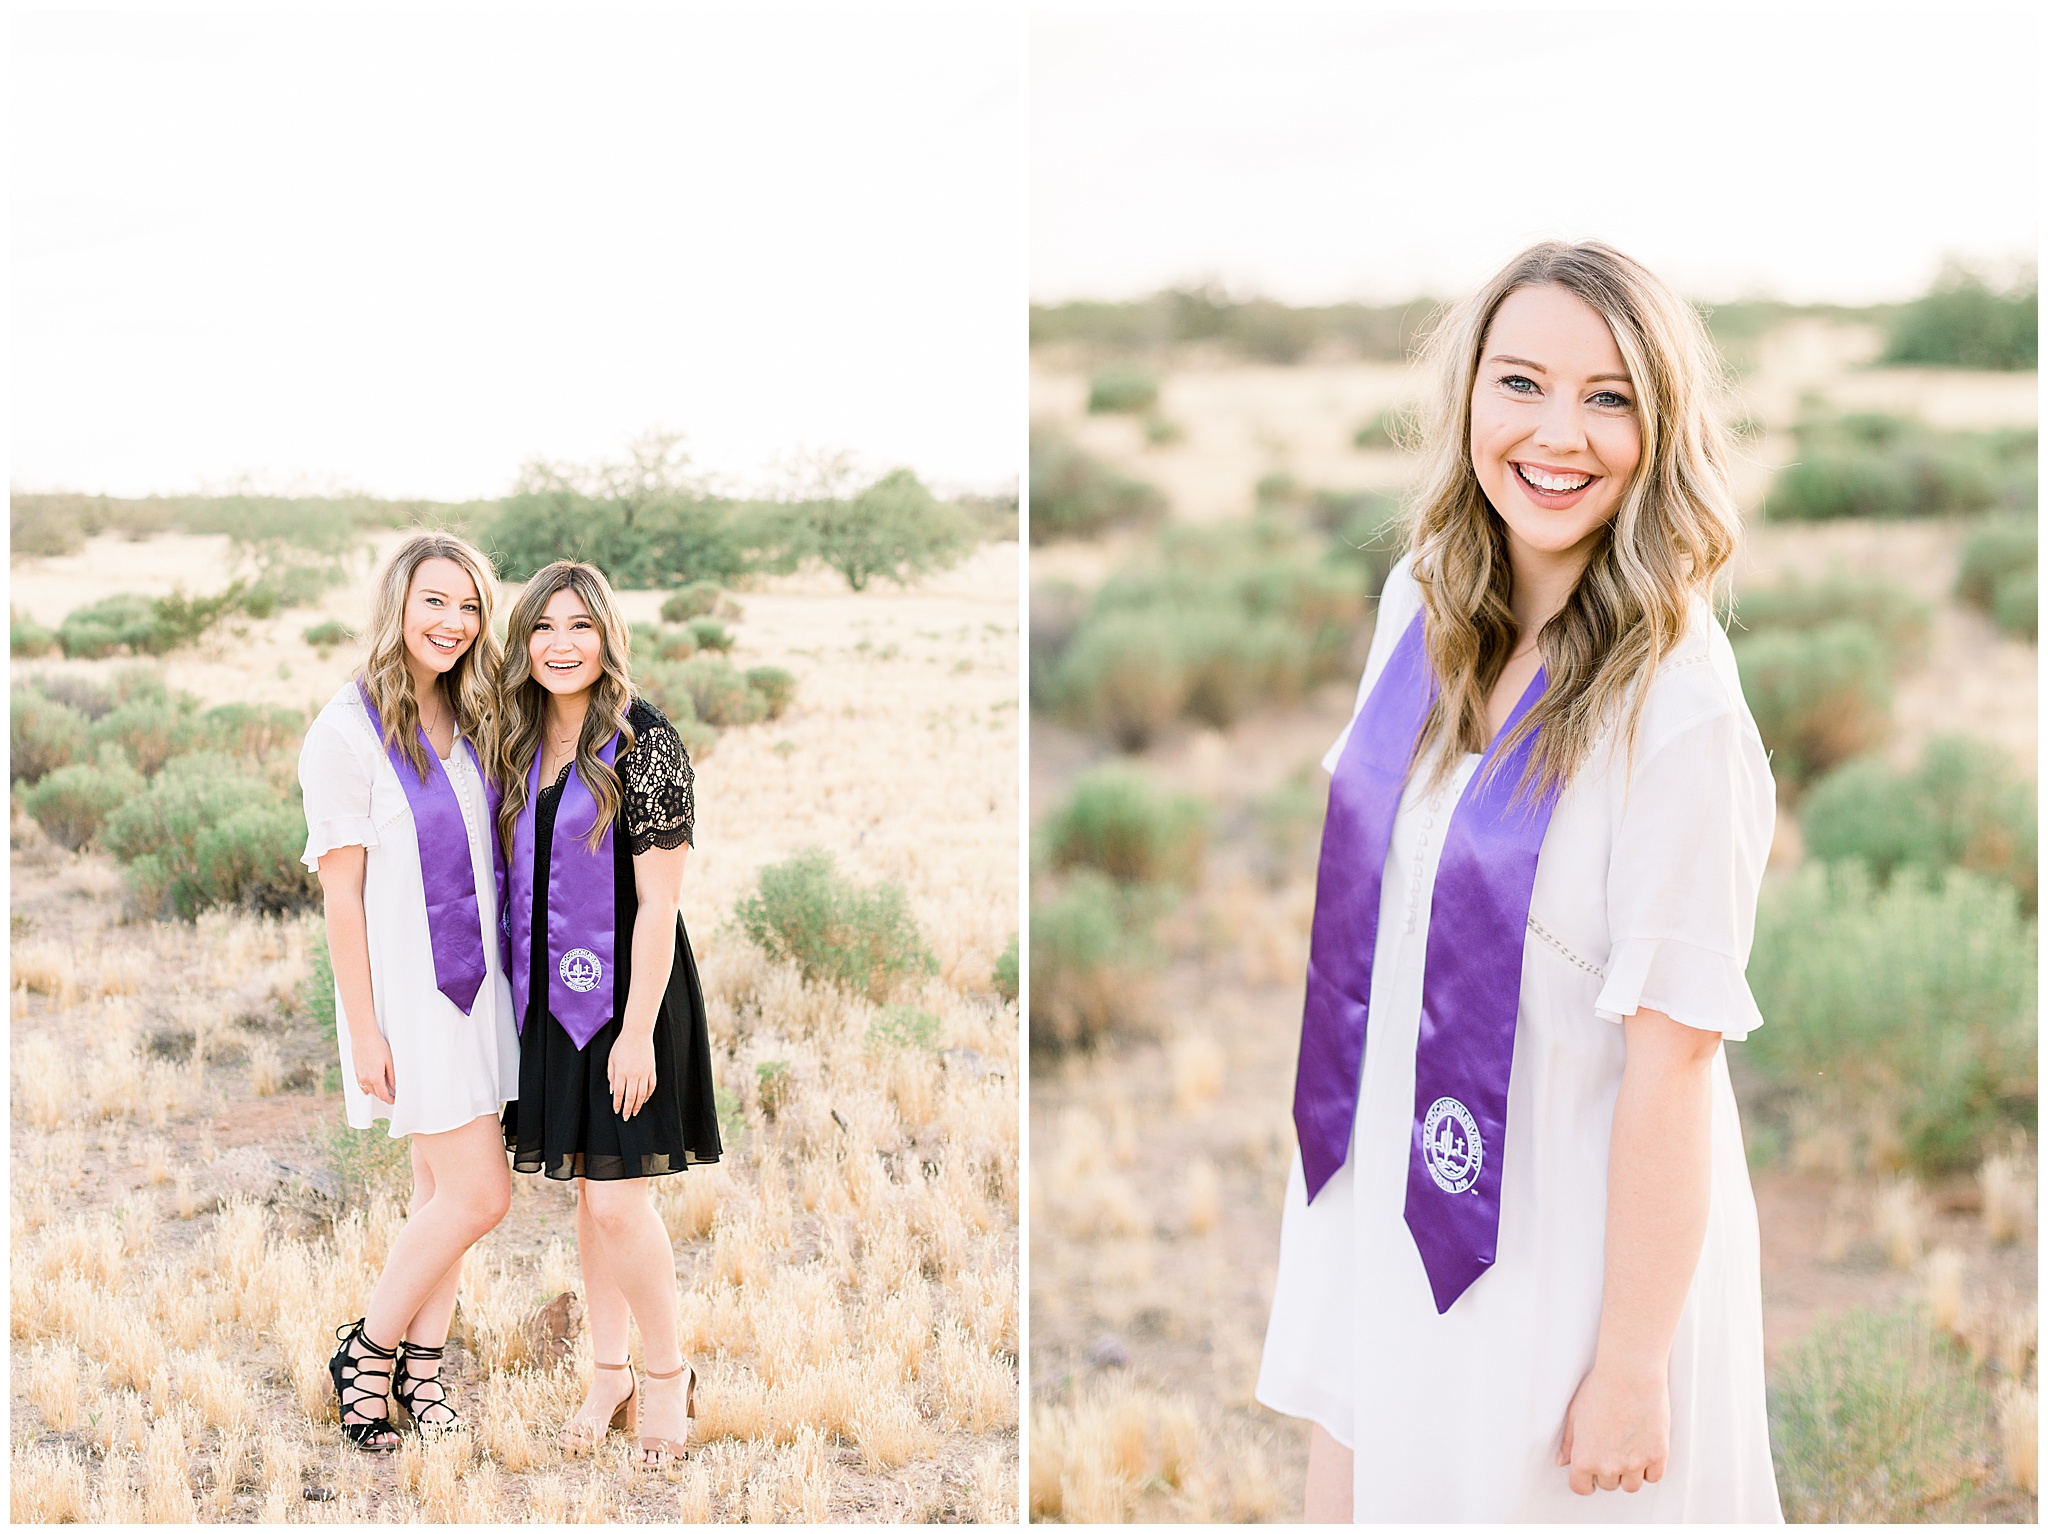 Aly-Kirk-Photo-Mesa-Arizona-College-Senior-Graduation-Photographer-Grand-Canyon-University